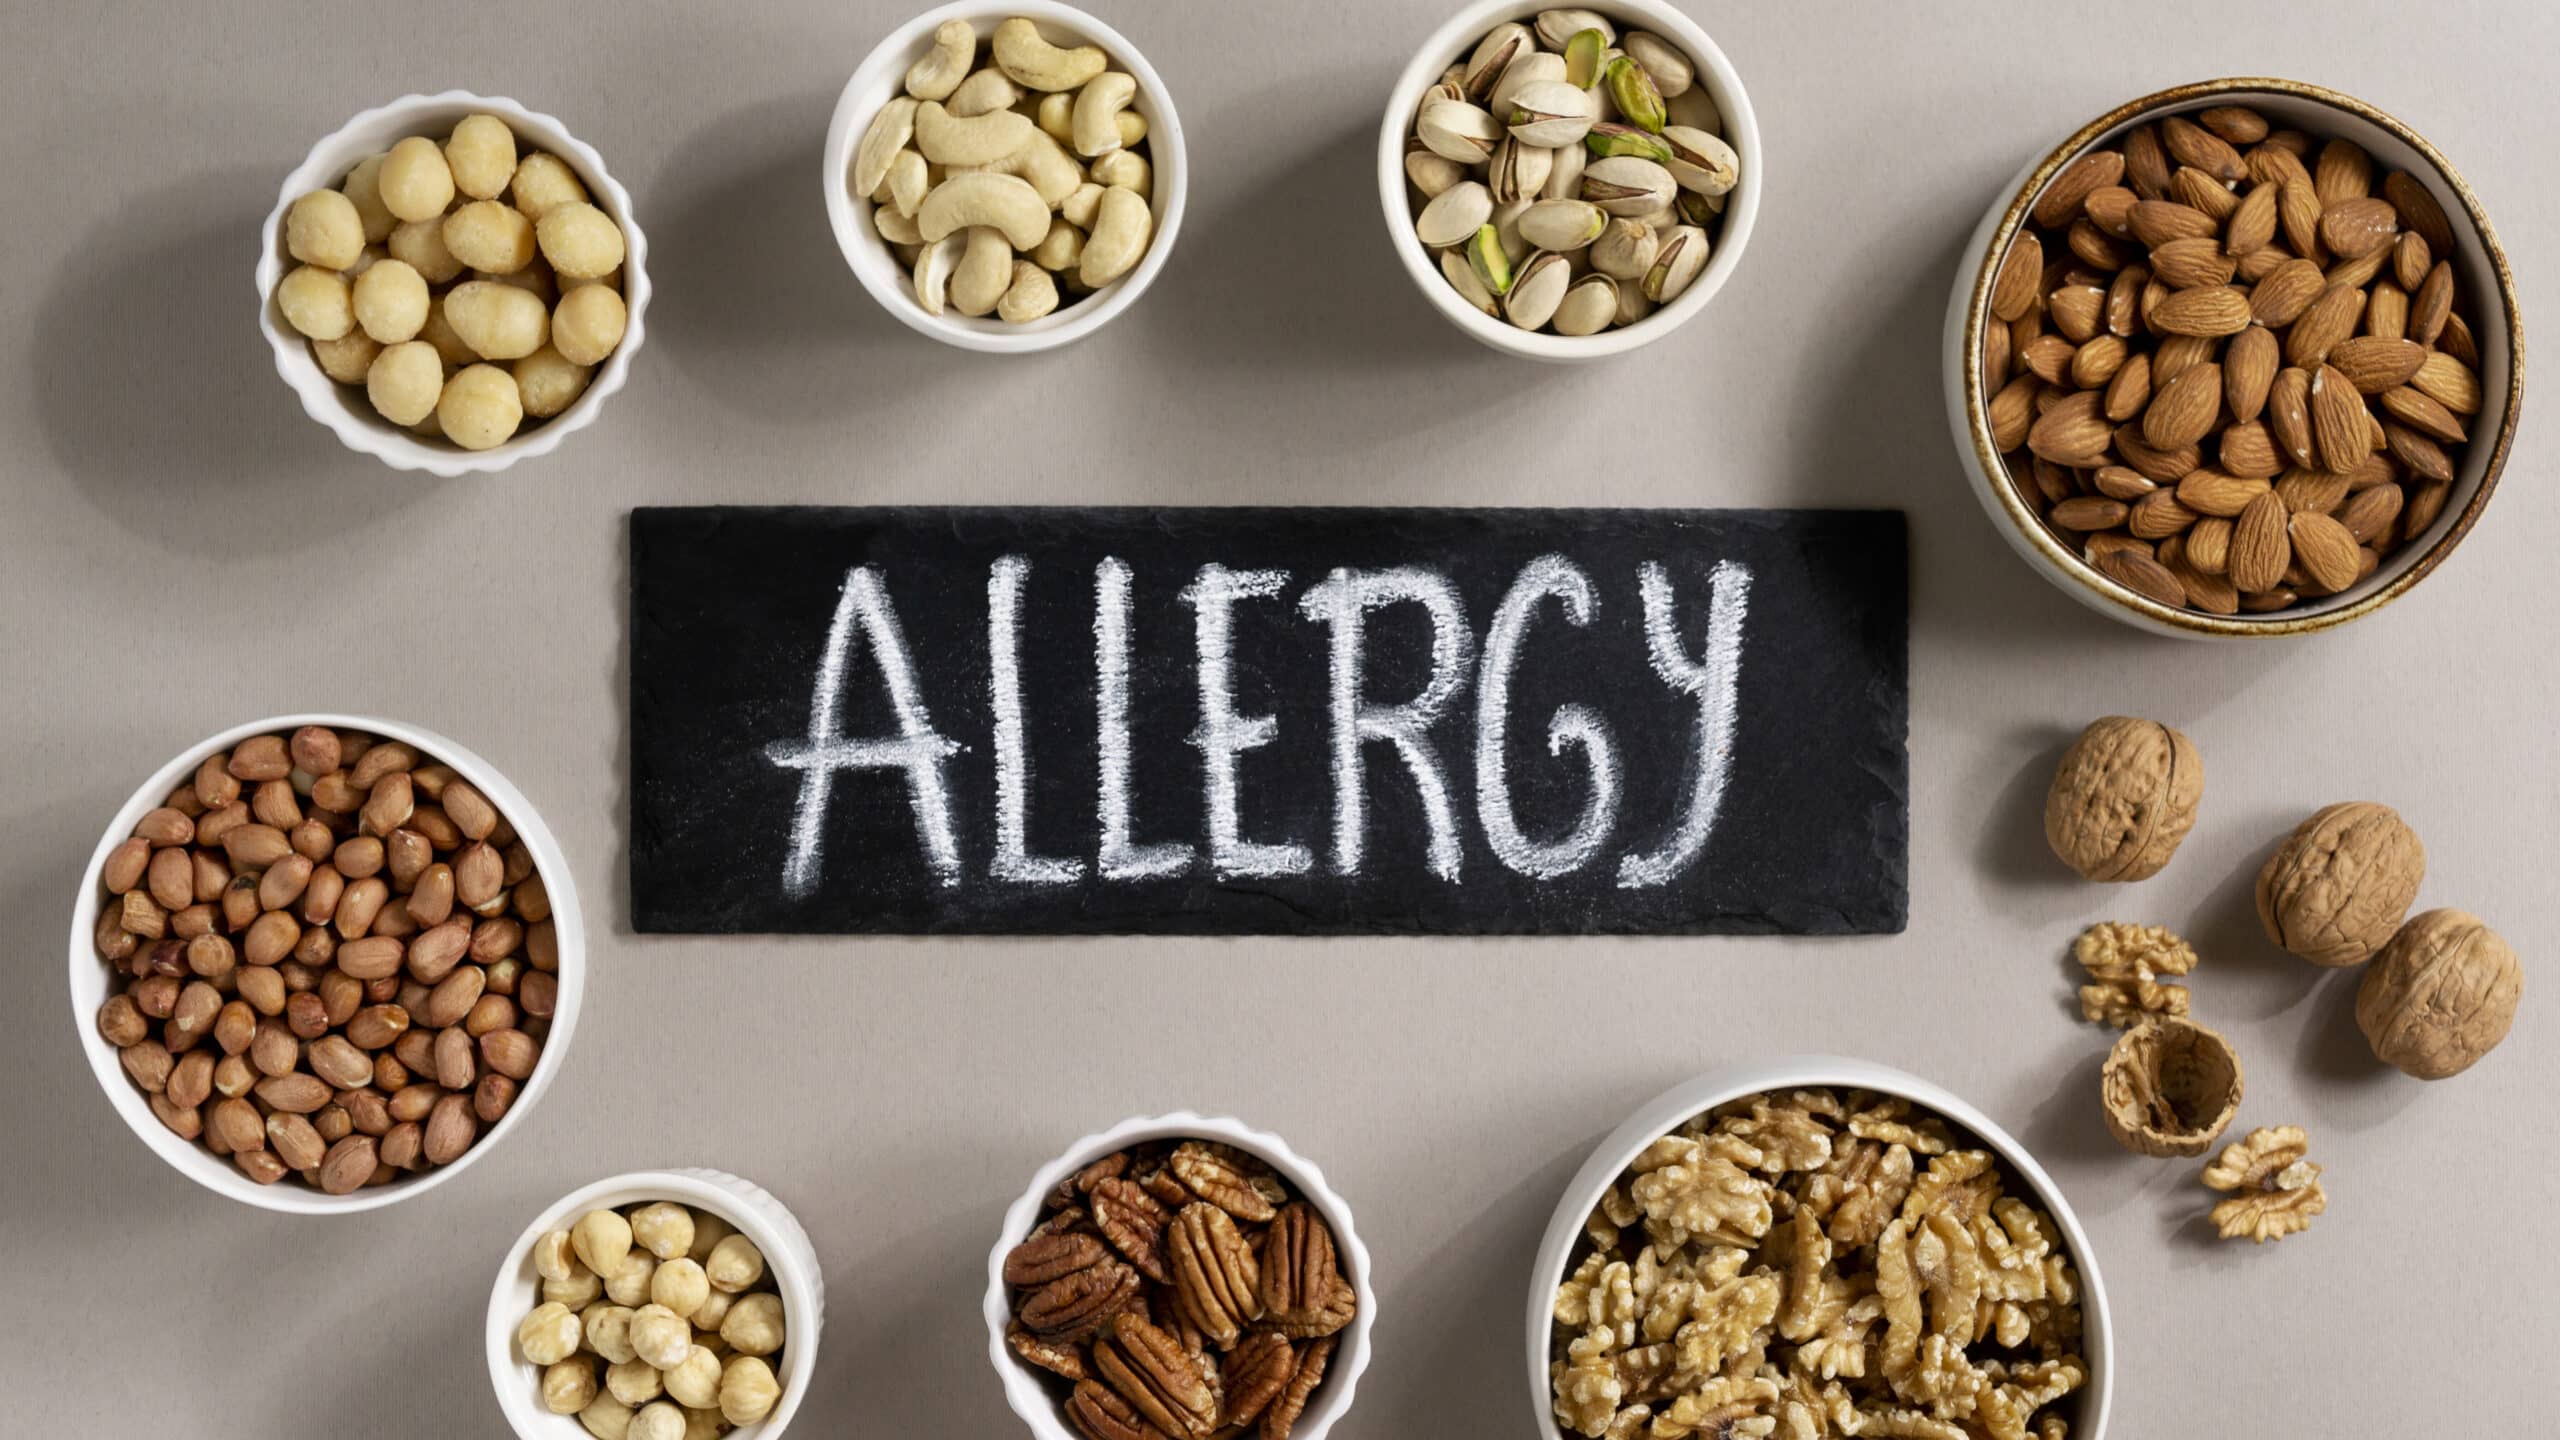 allspice allergy